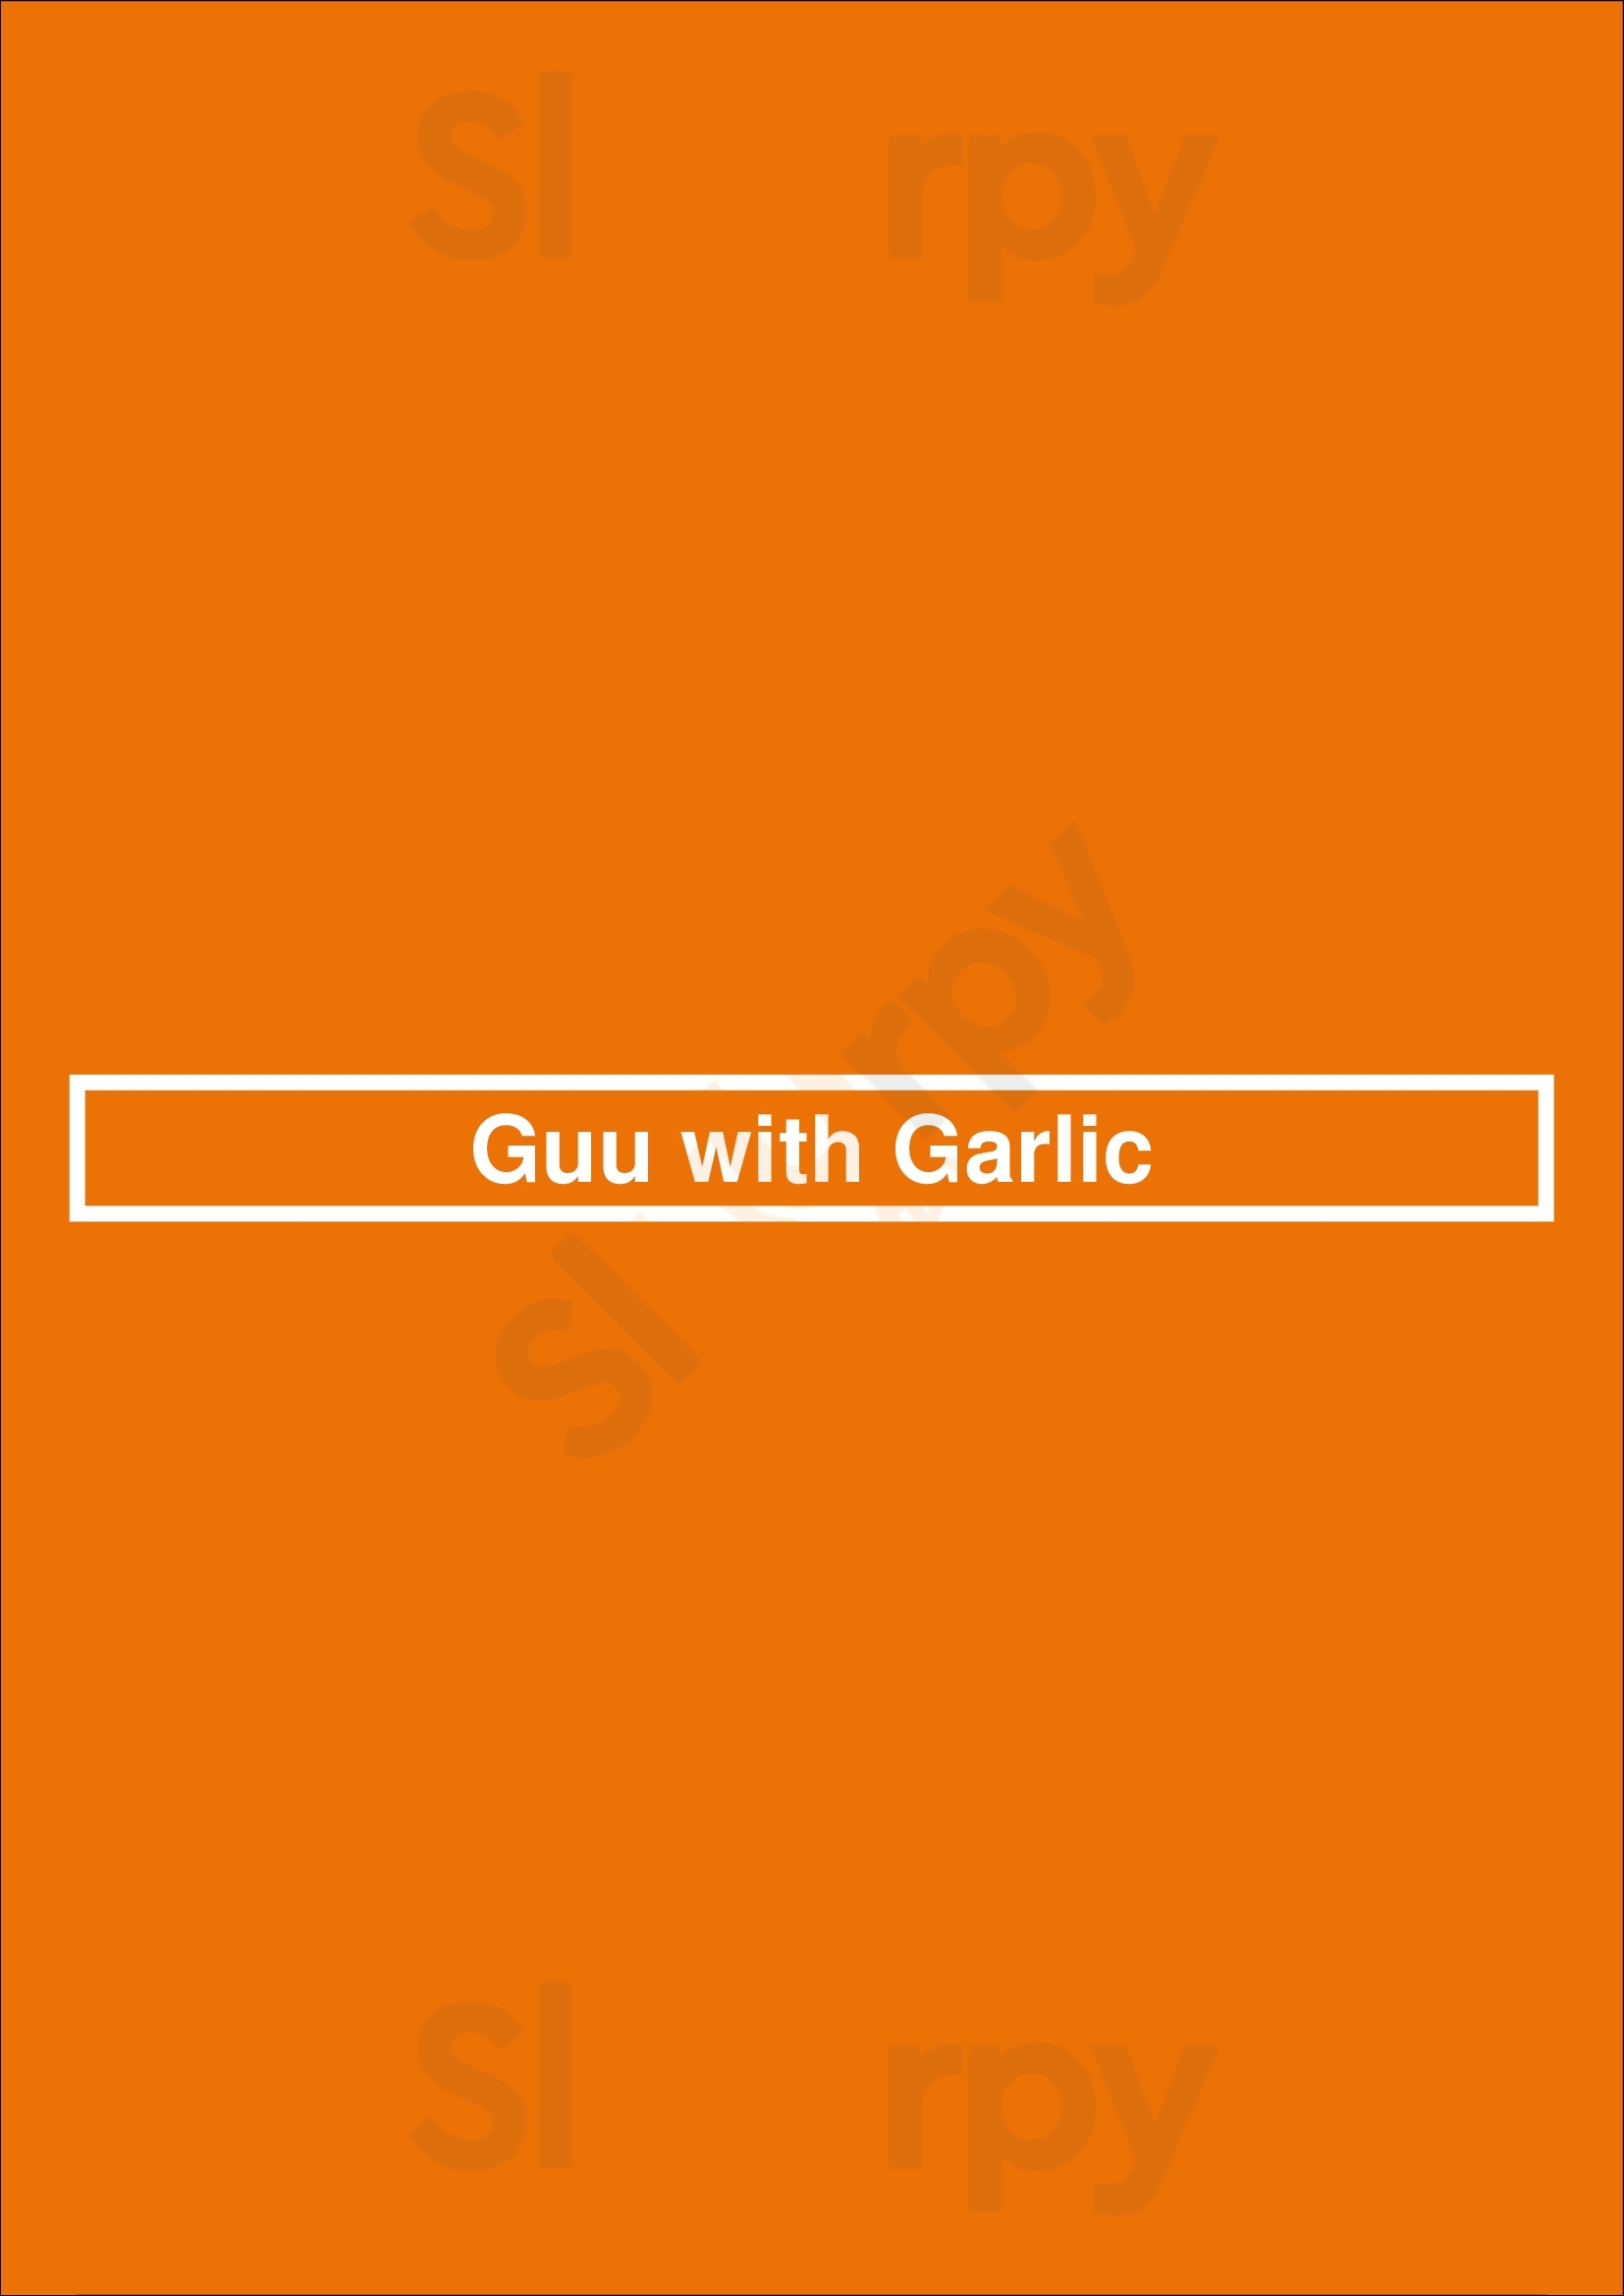 Guu With Garlic Vancouver Menu - 1